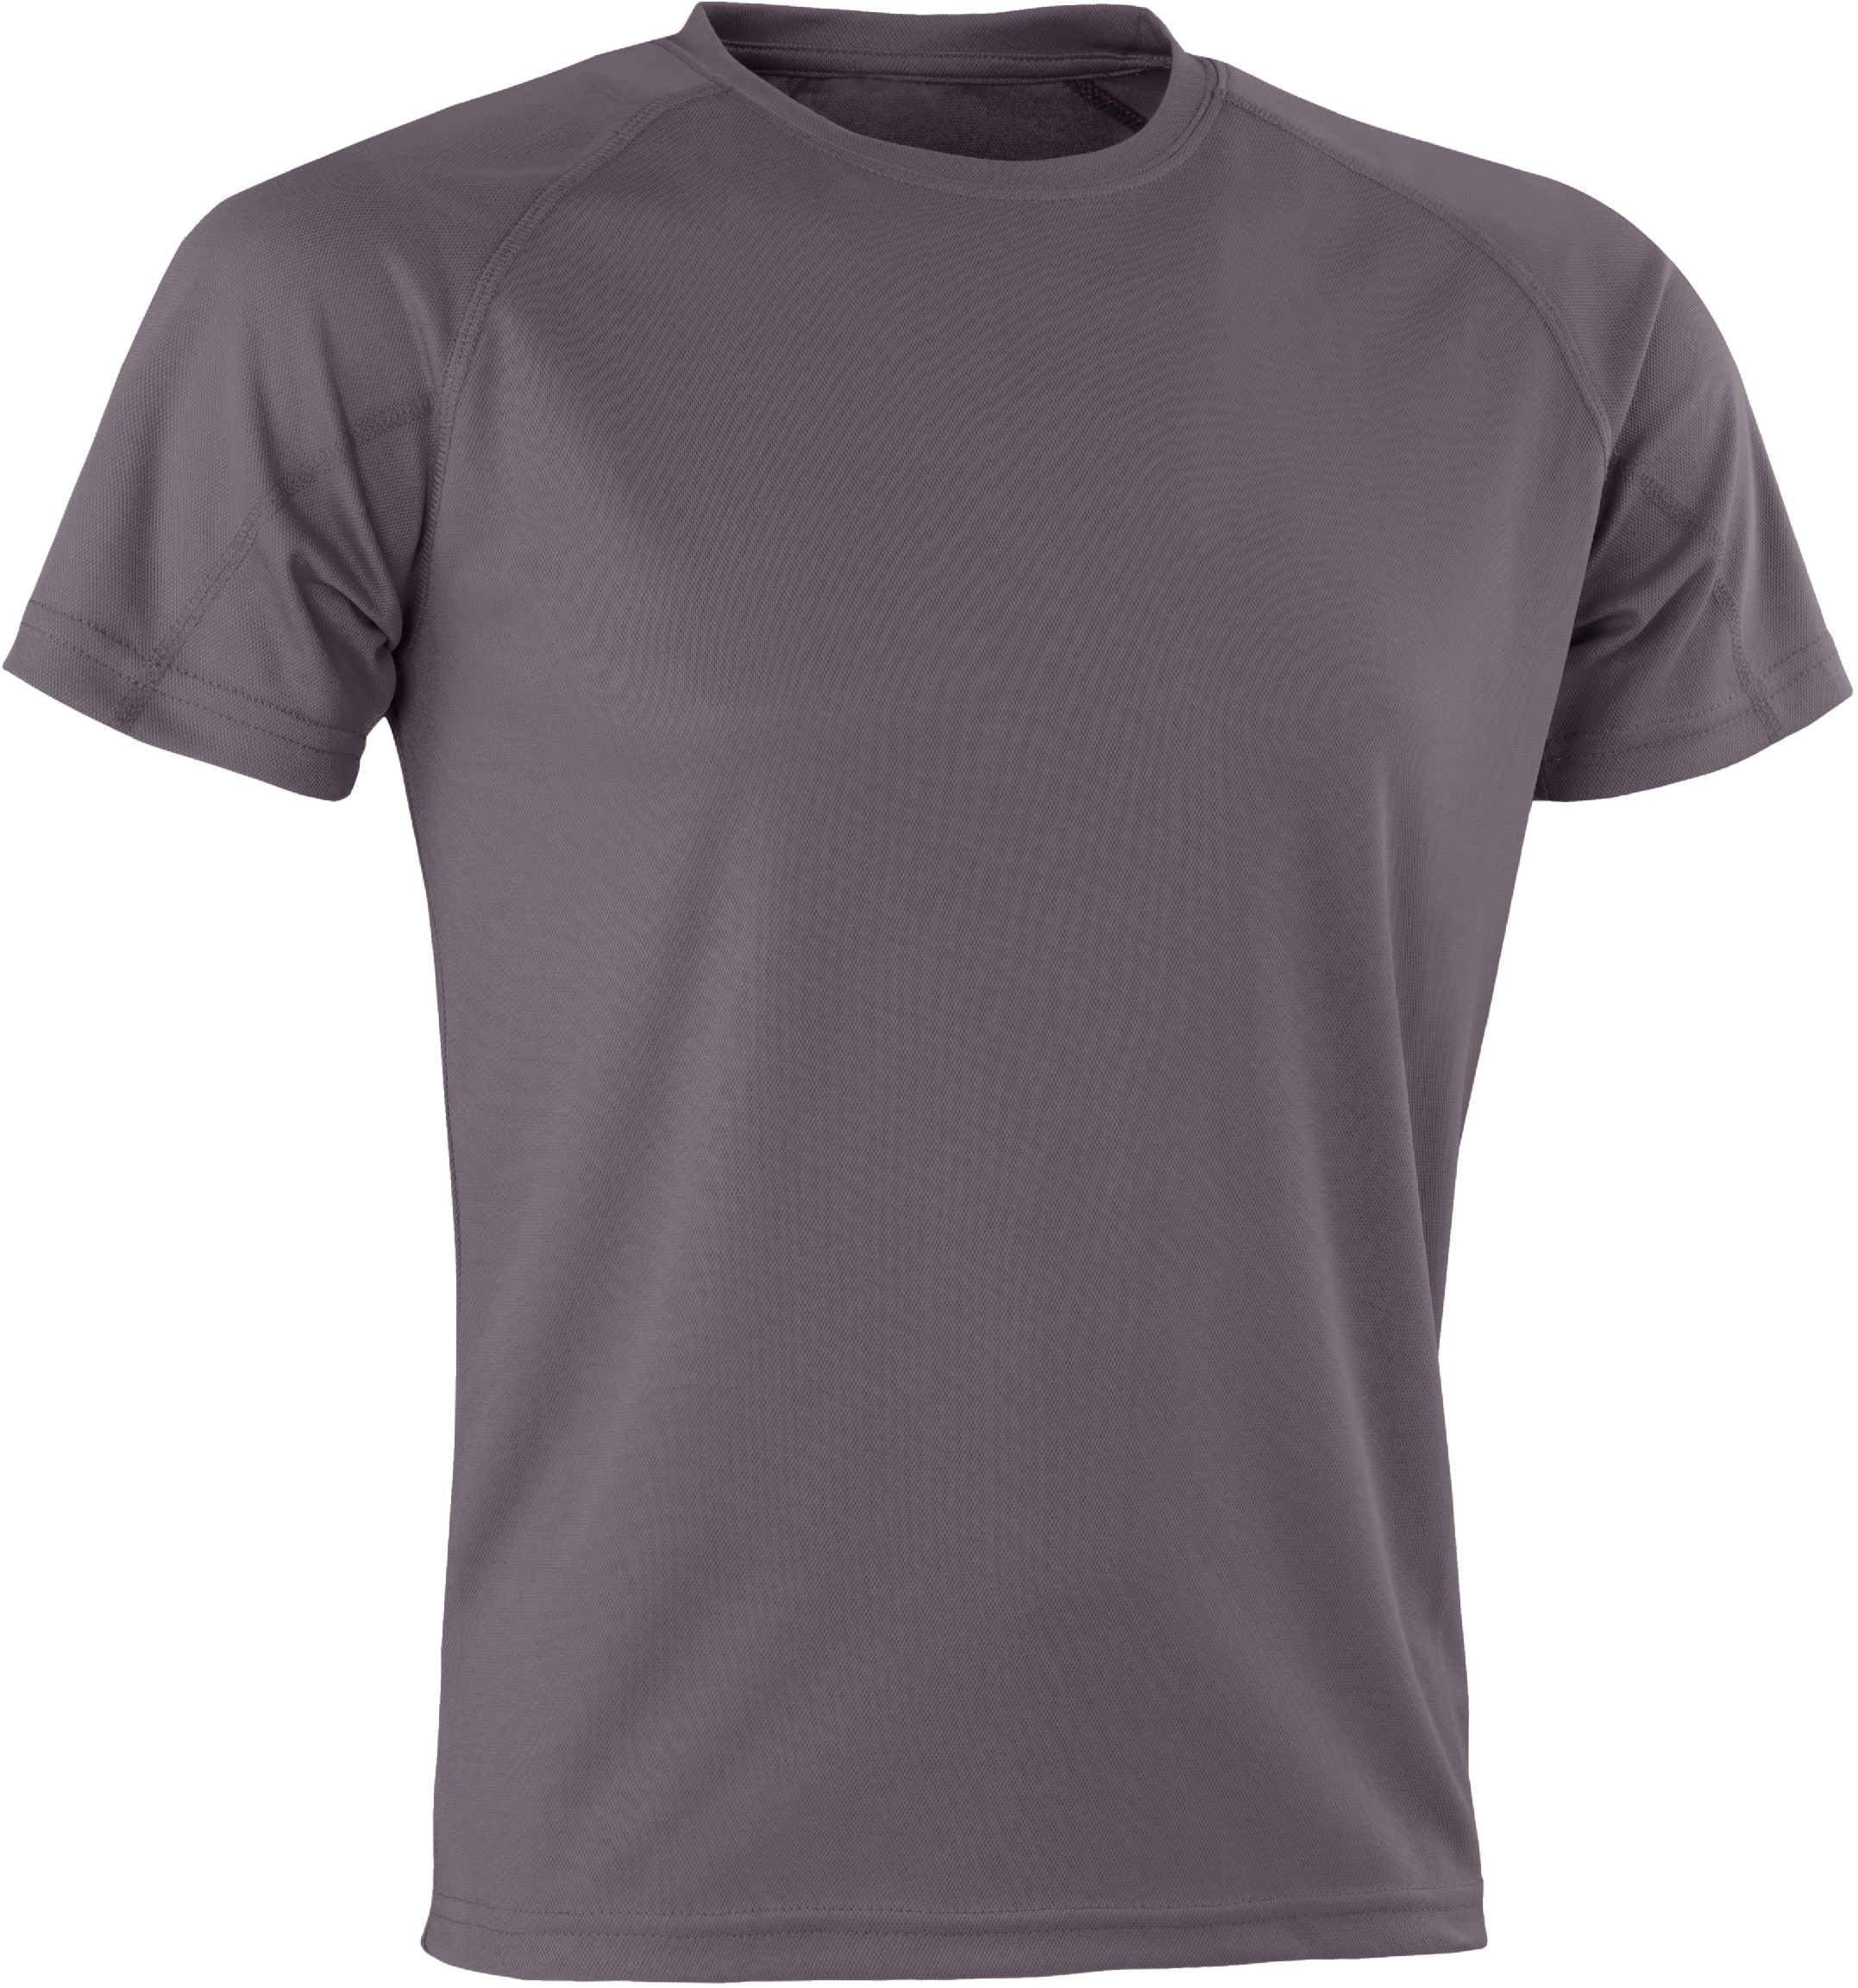 Sportovní tričko Aircool S287X Barva: šedá, Velikost: XS